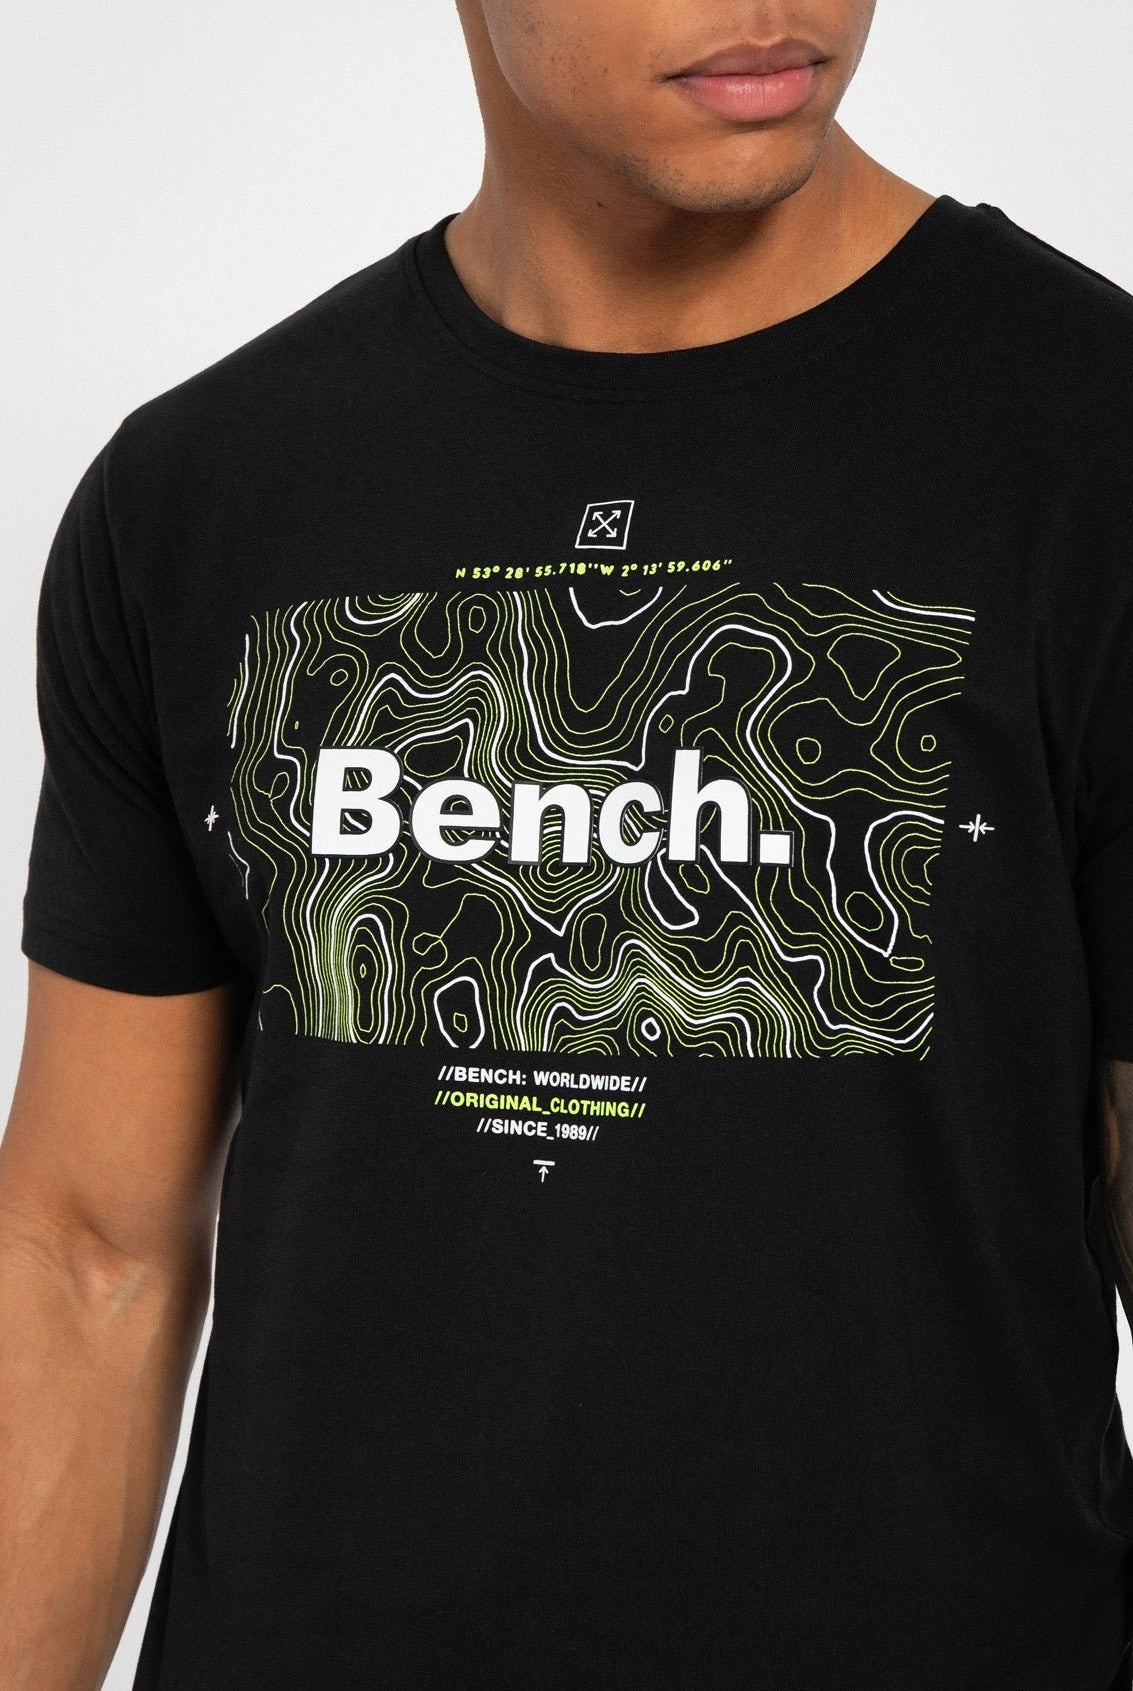 Mens 'HAWES' T-Shirt - BLACK - Shop at www.Bench.co.uk #LoveMyHood